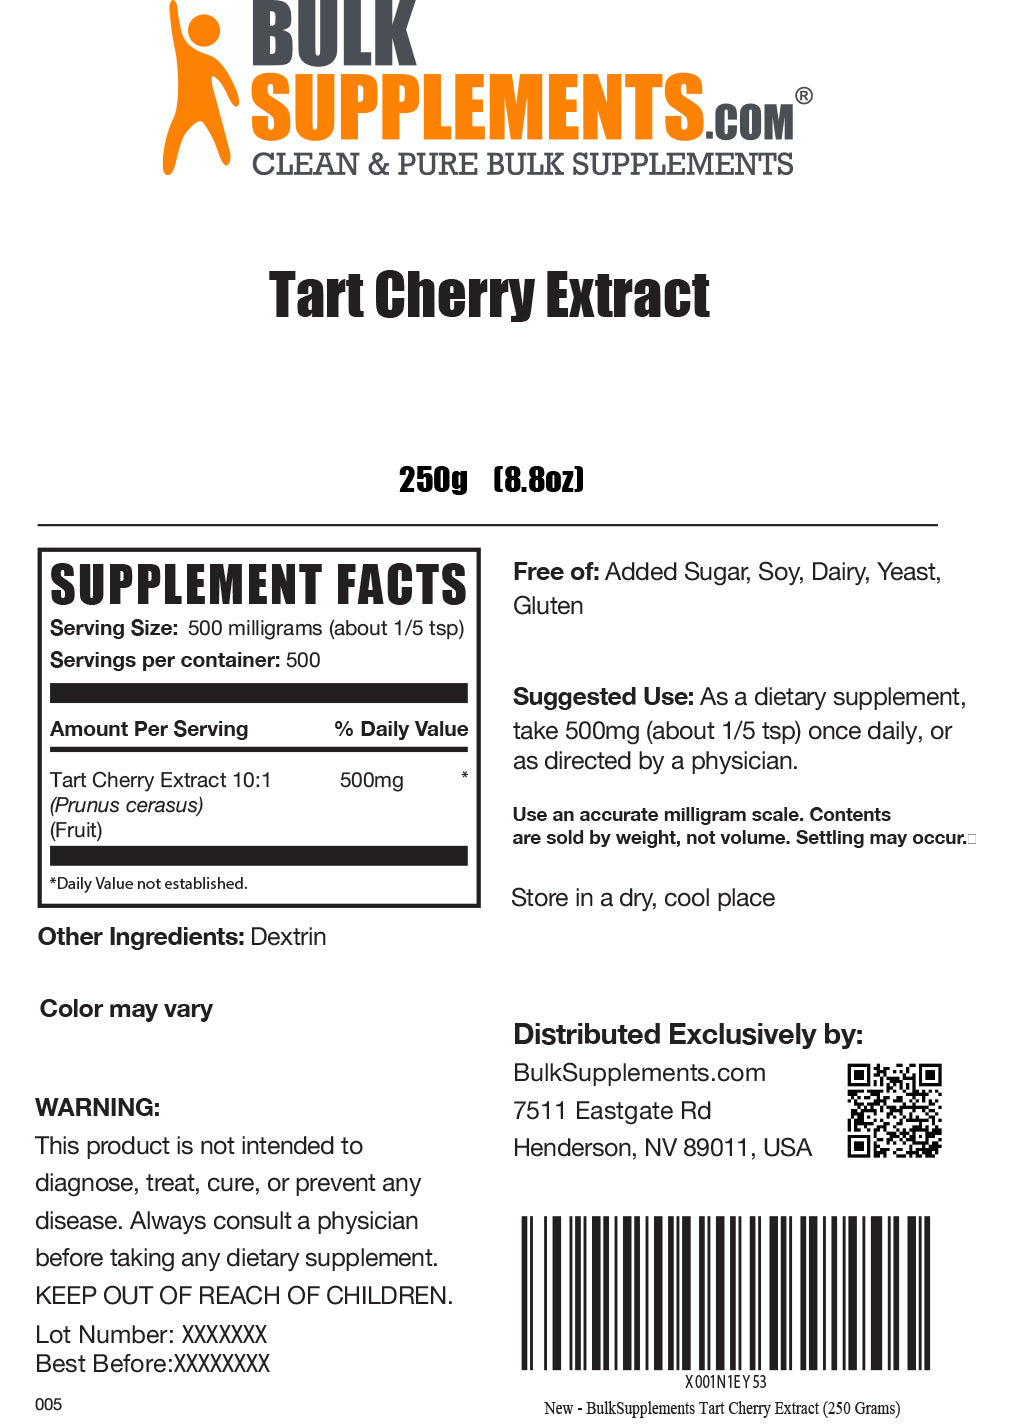 Tart Cherry Extract powder label 250g